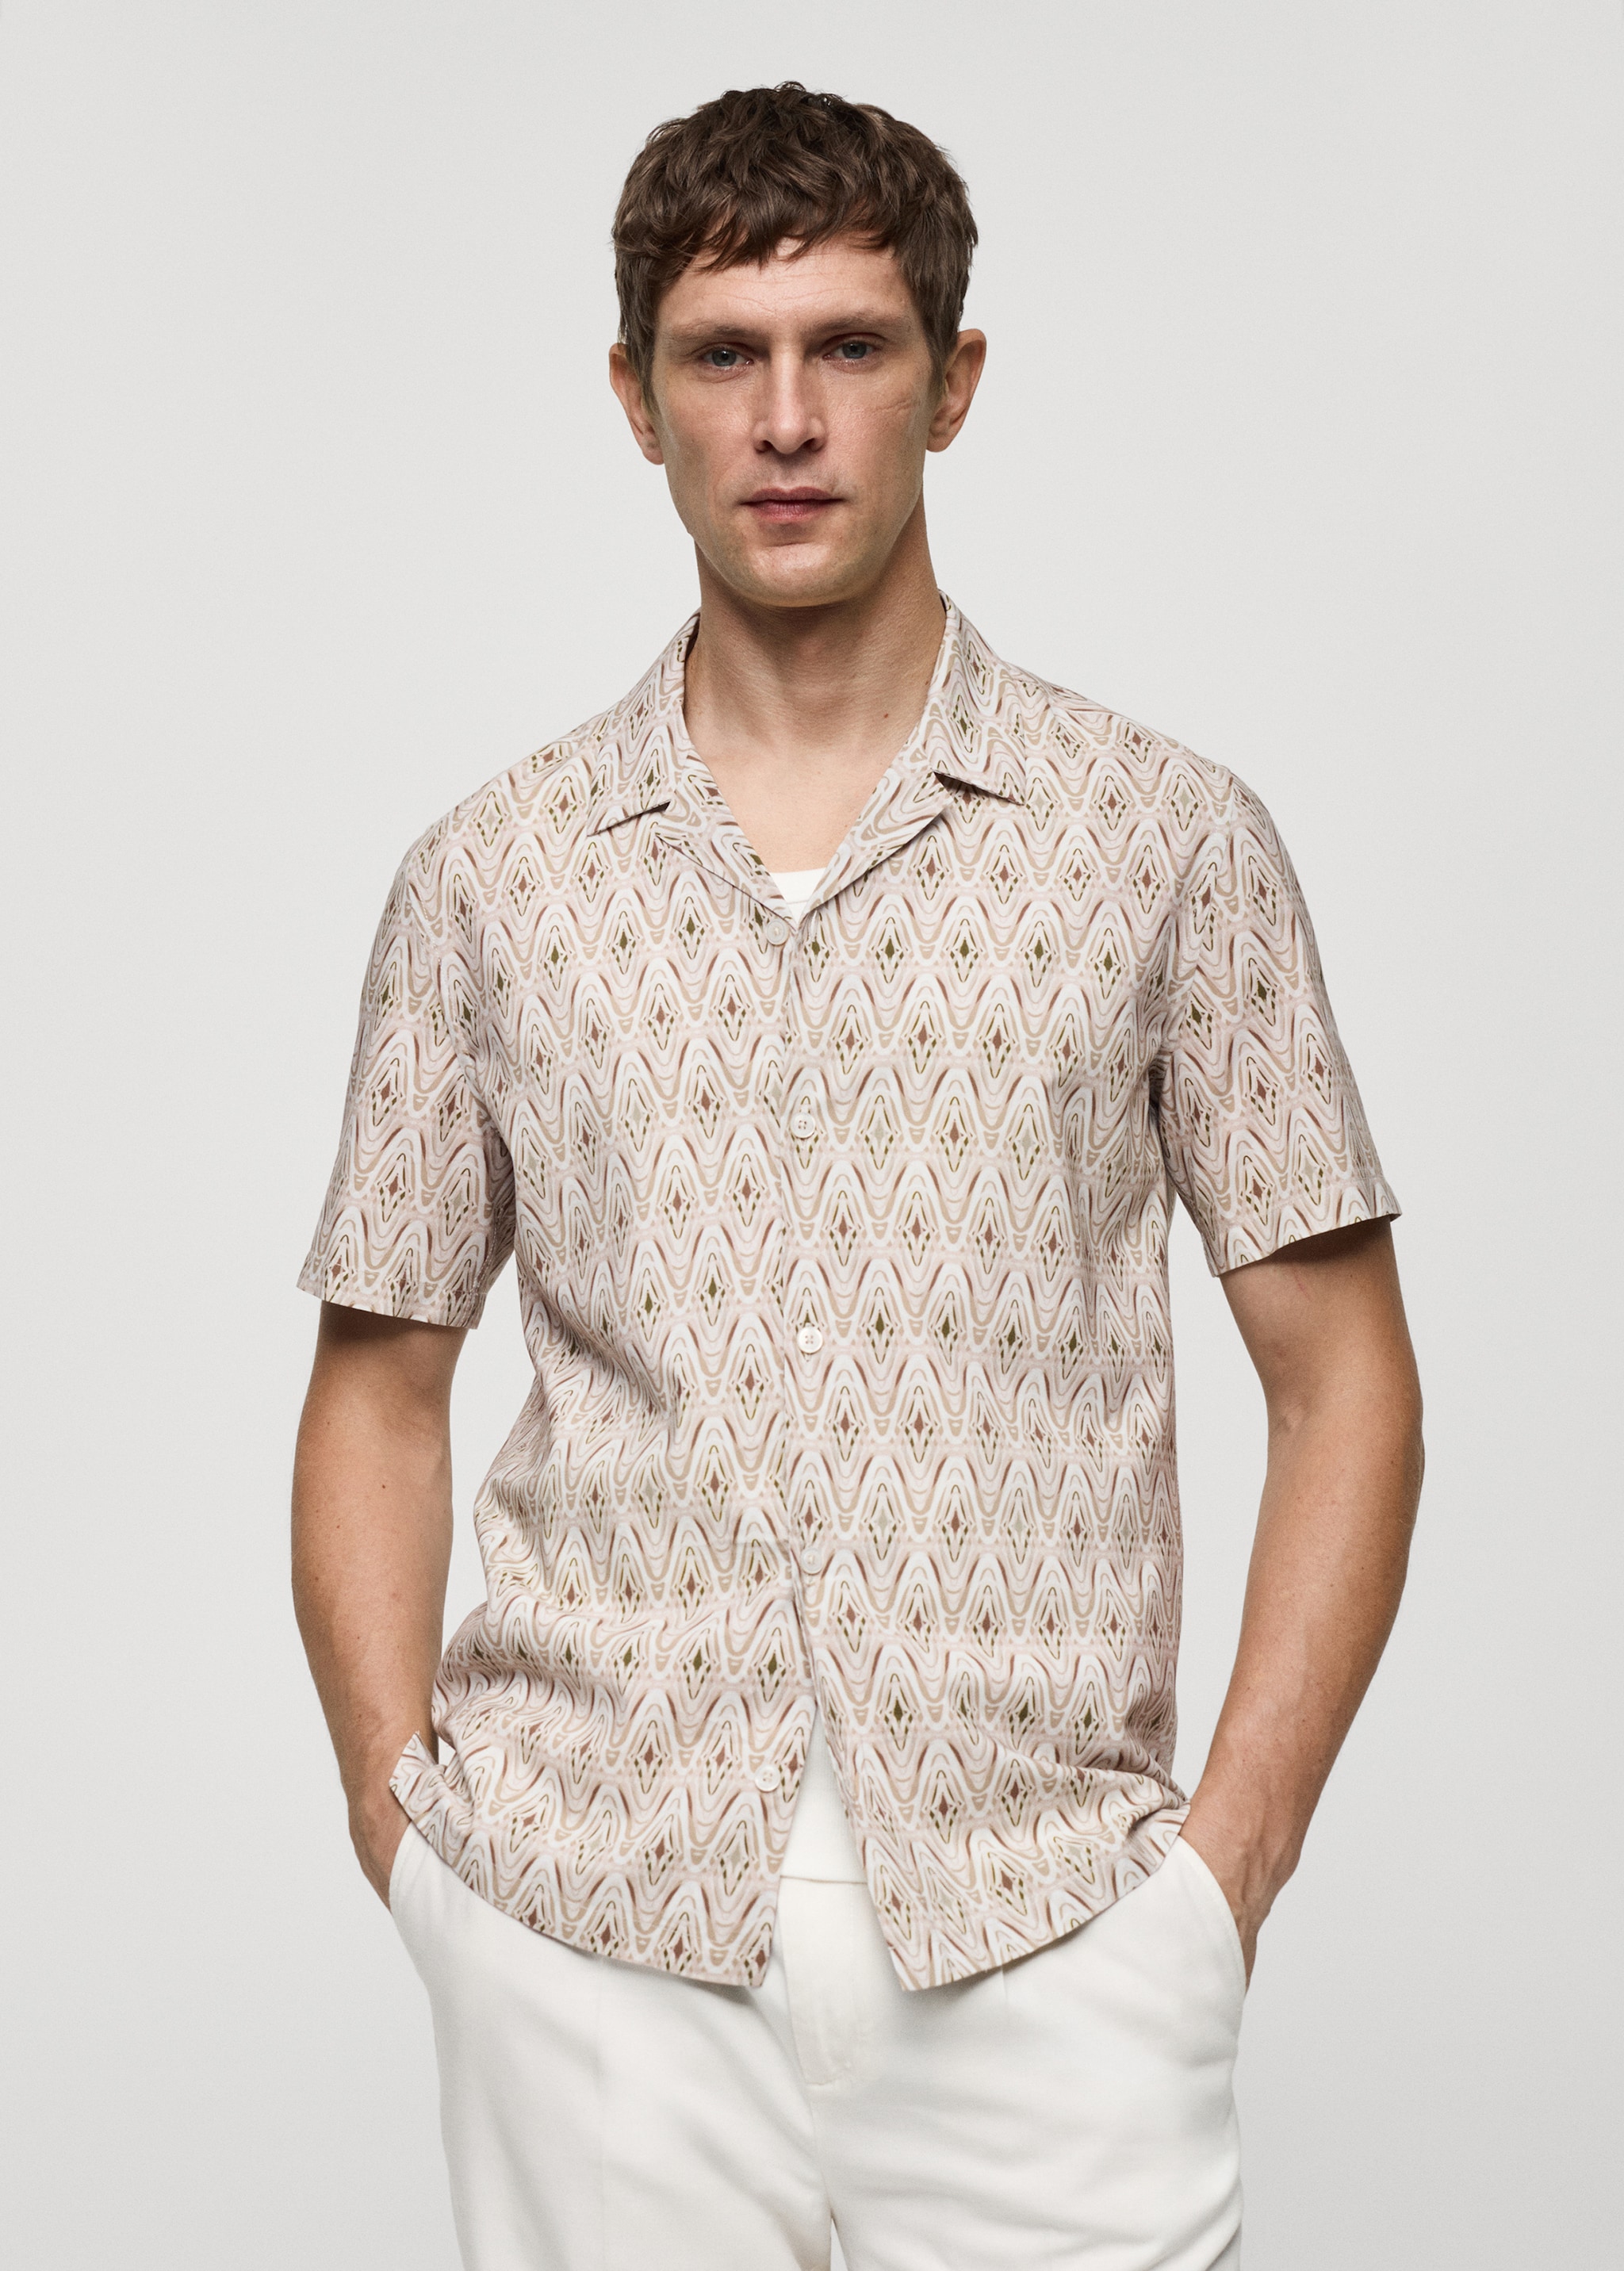 Printed flowing shirt with bowling collar - Medium plane